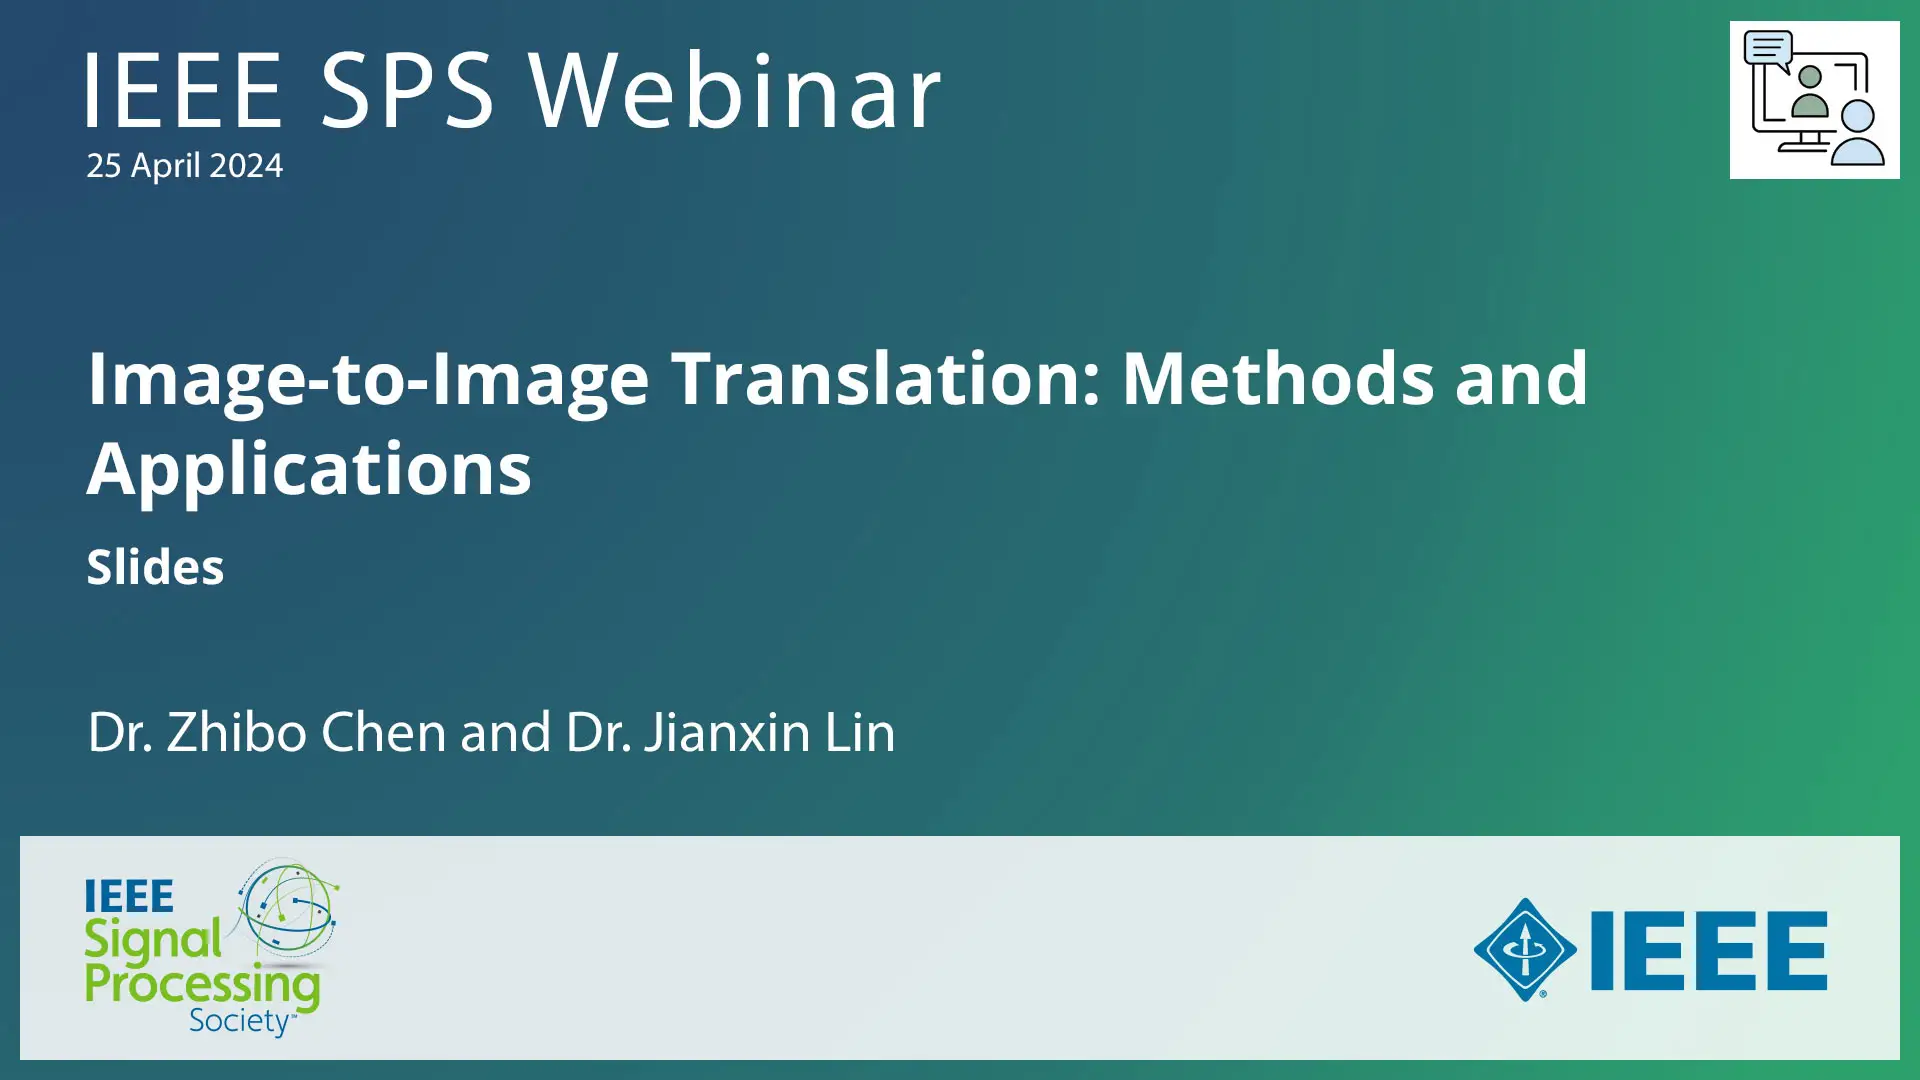 Slides: Image-to-Image Translation: Methods and Applications